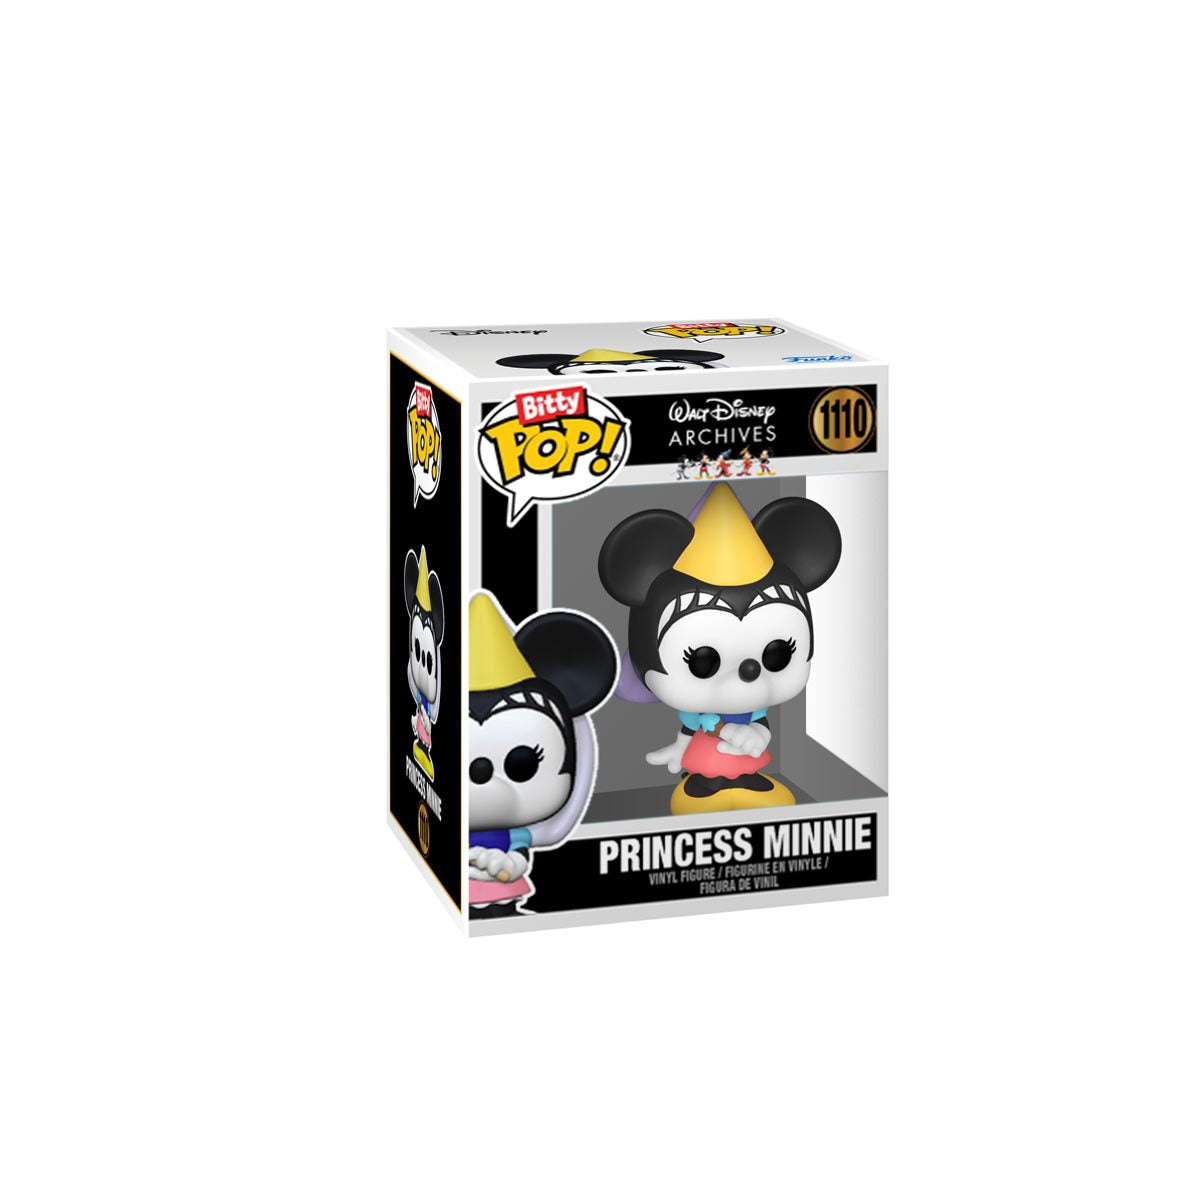 Funko Bitty Pop: Disney - Mickey Hechicero 4 Pack